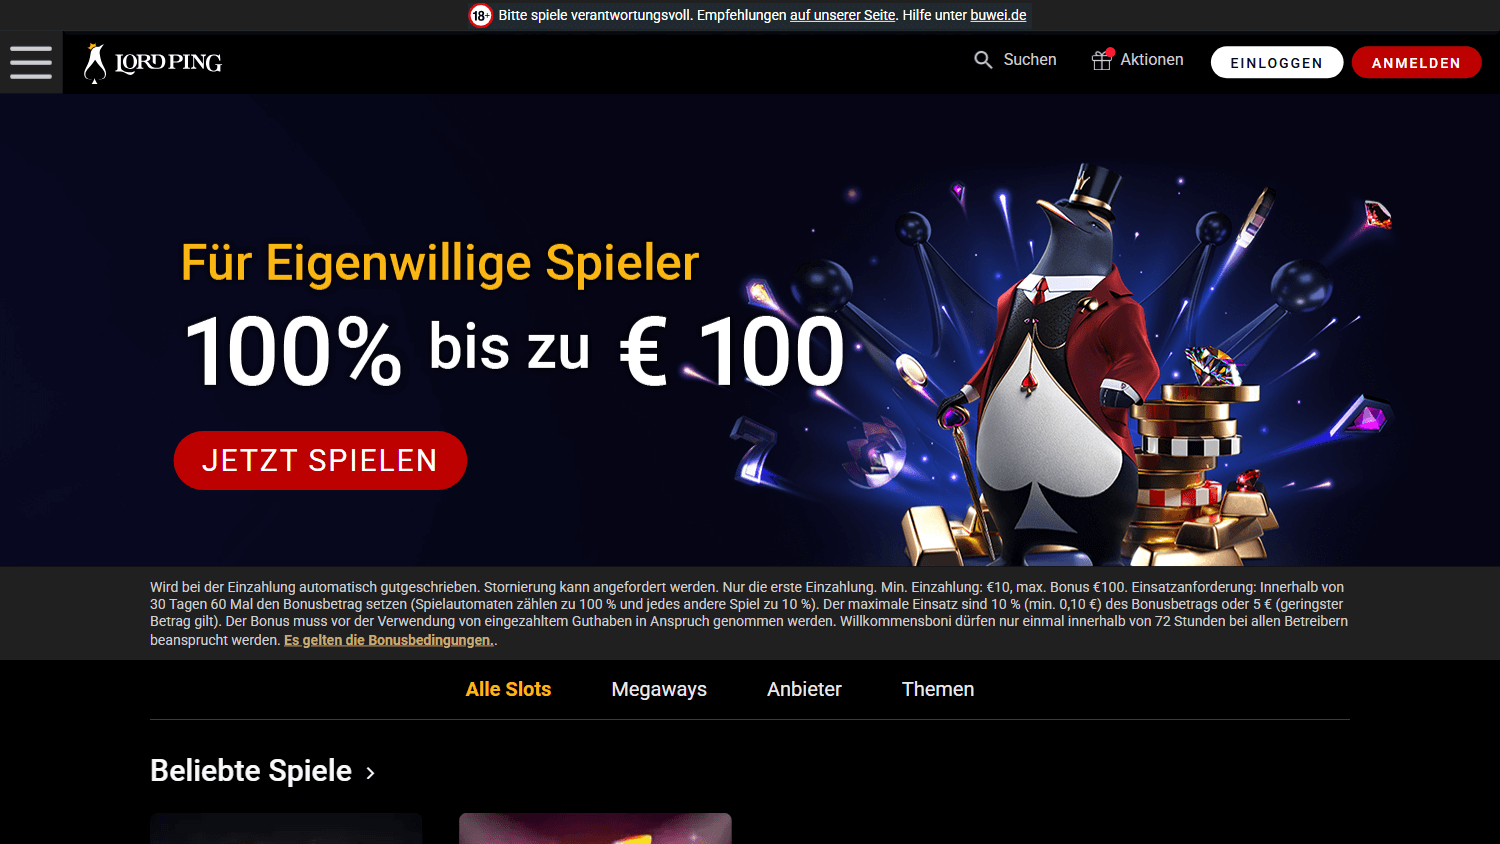 lord_ping_casino_de_homepage_desktop